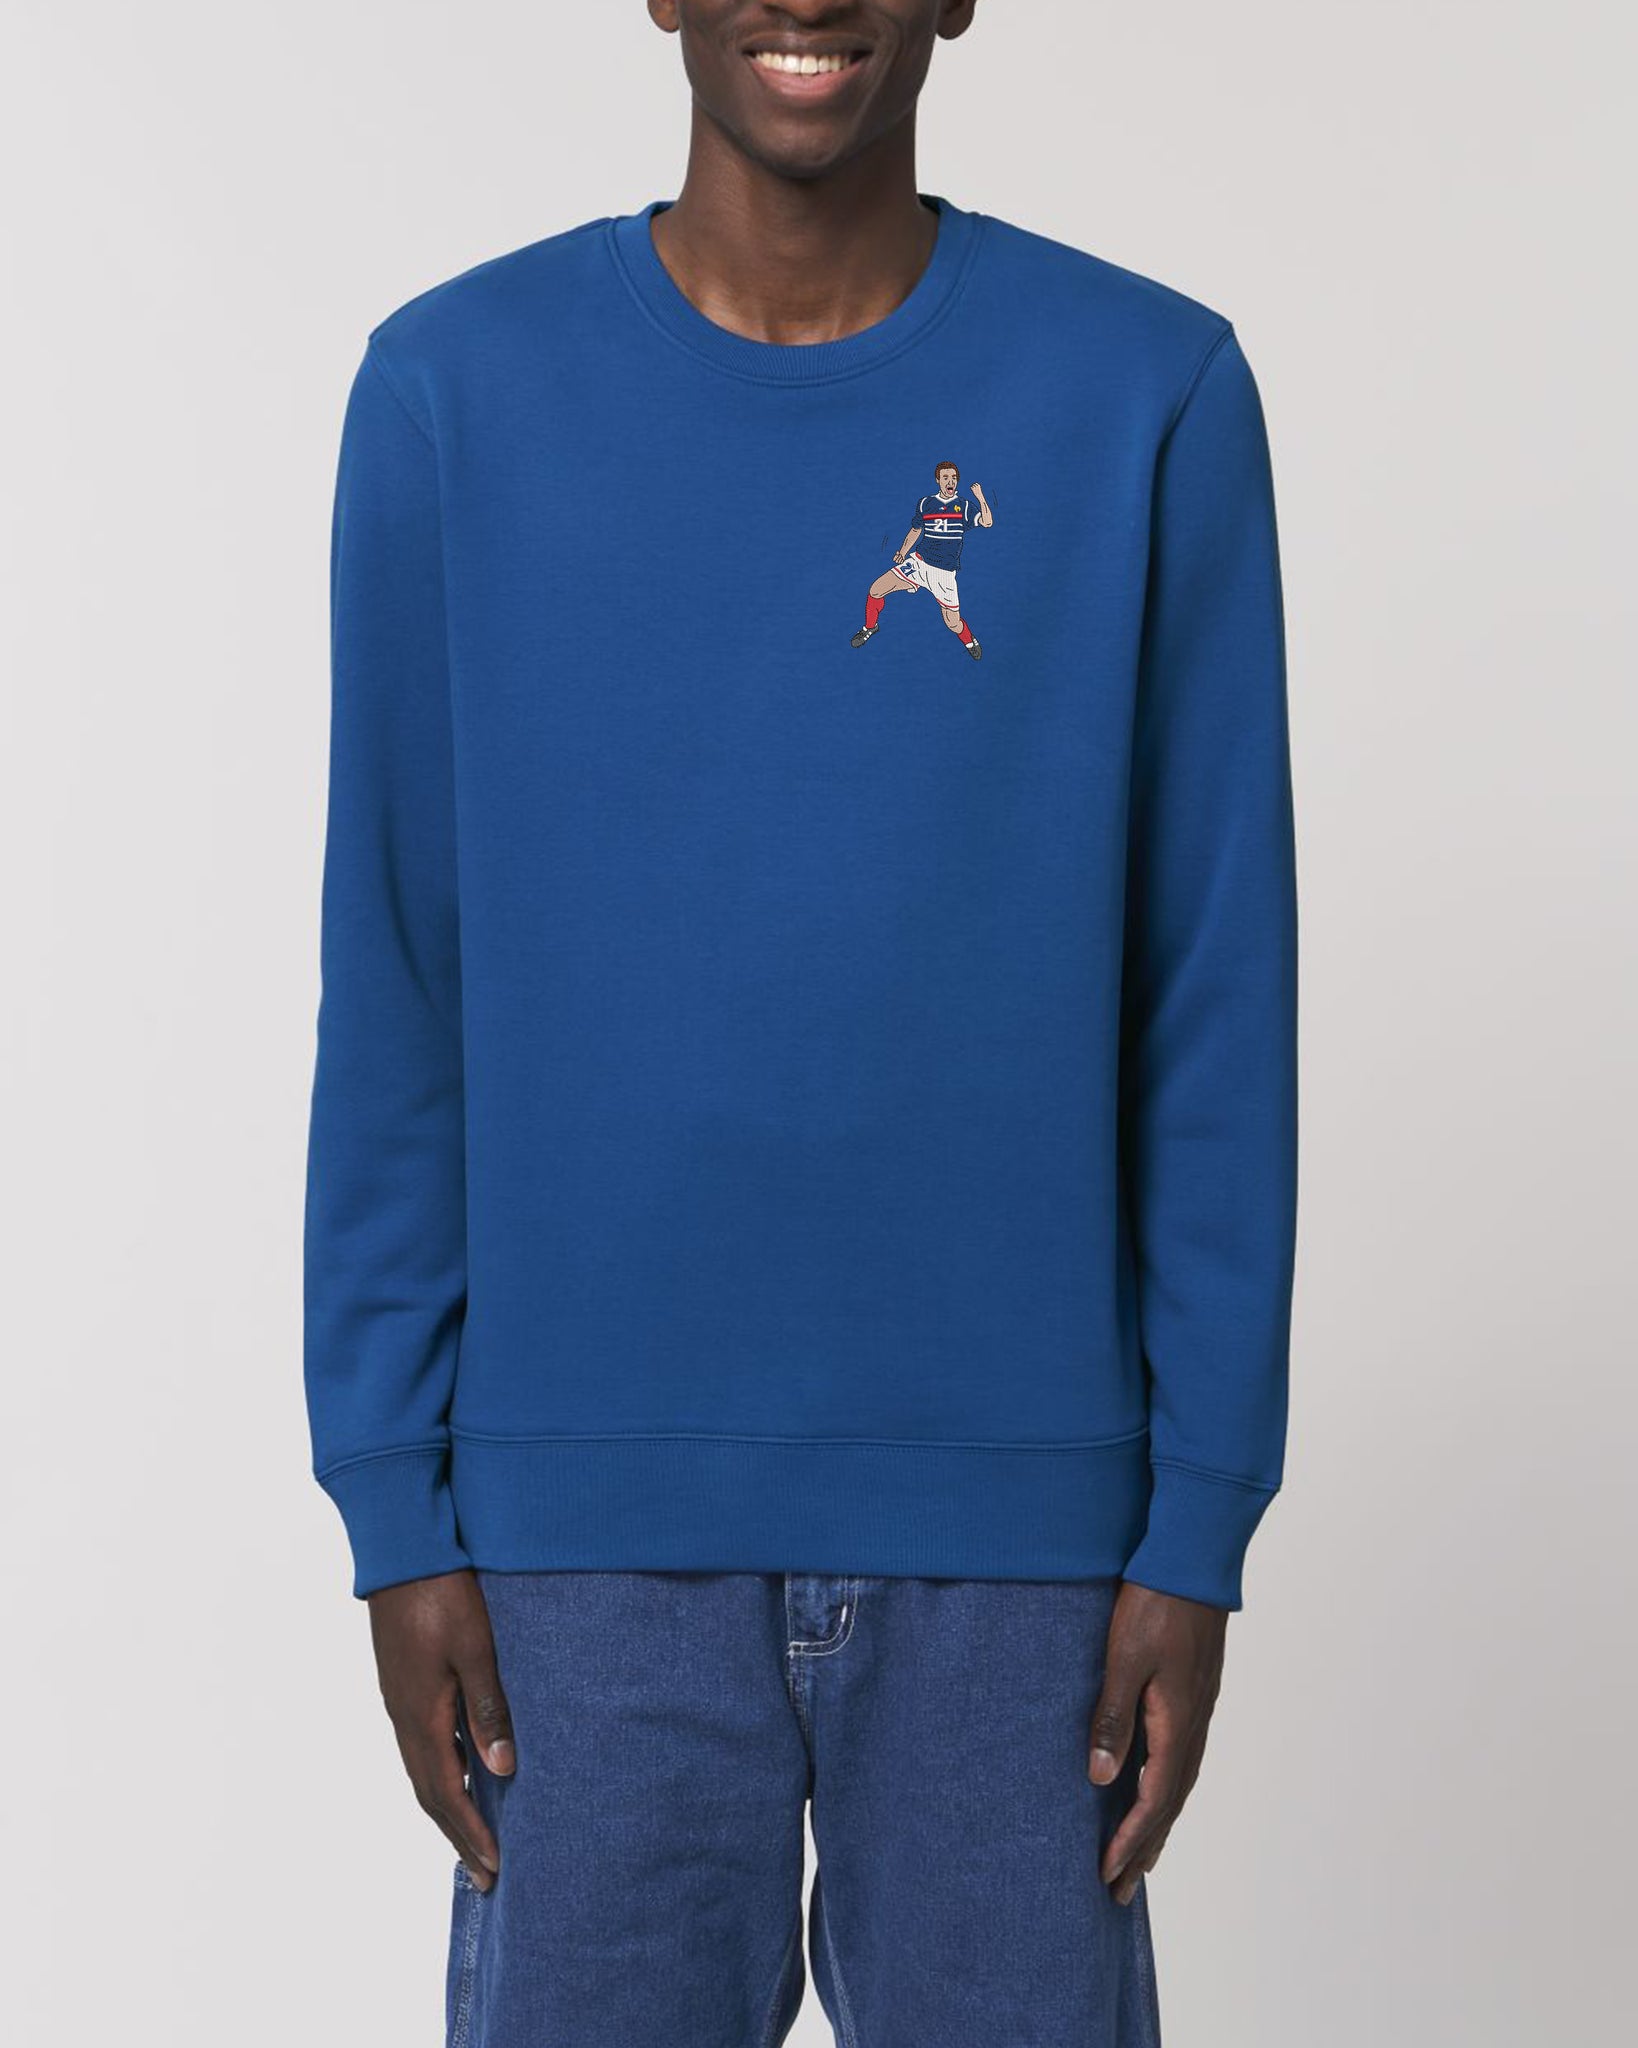 Duga 98 sweatshirt 👅 embroidered